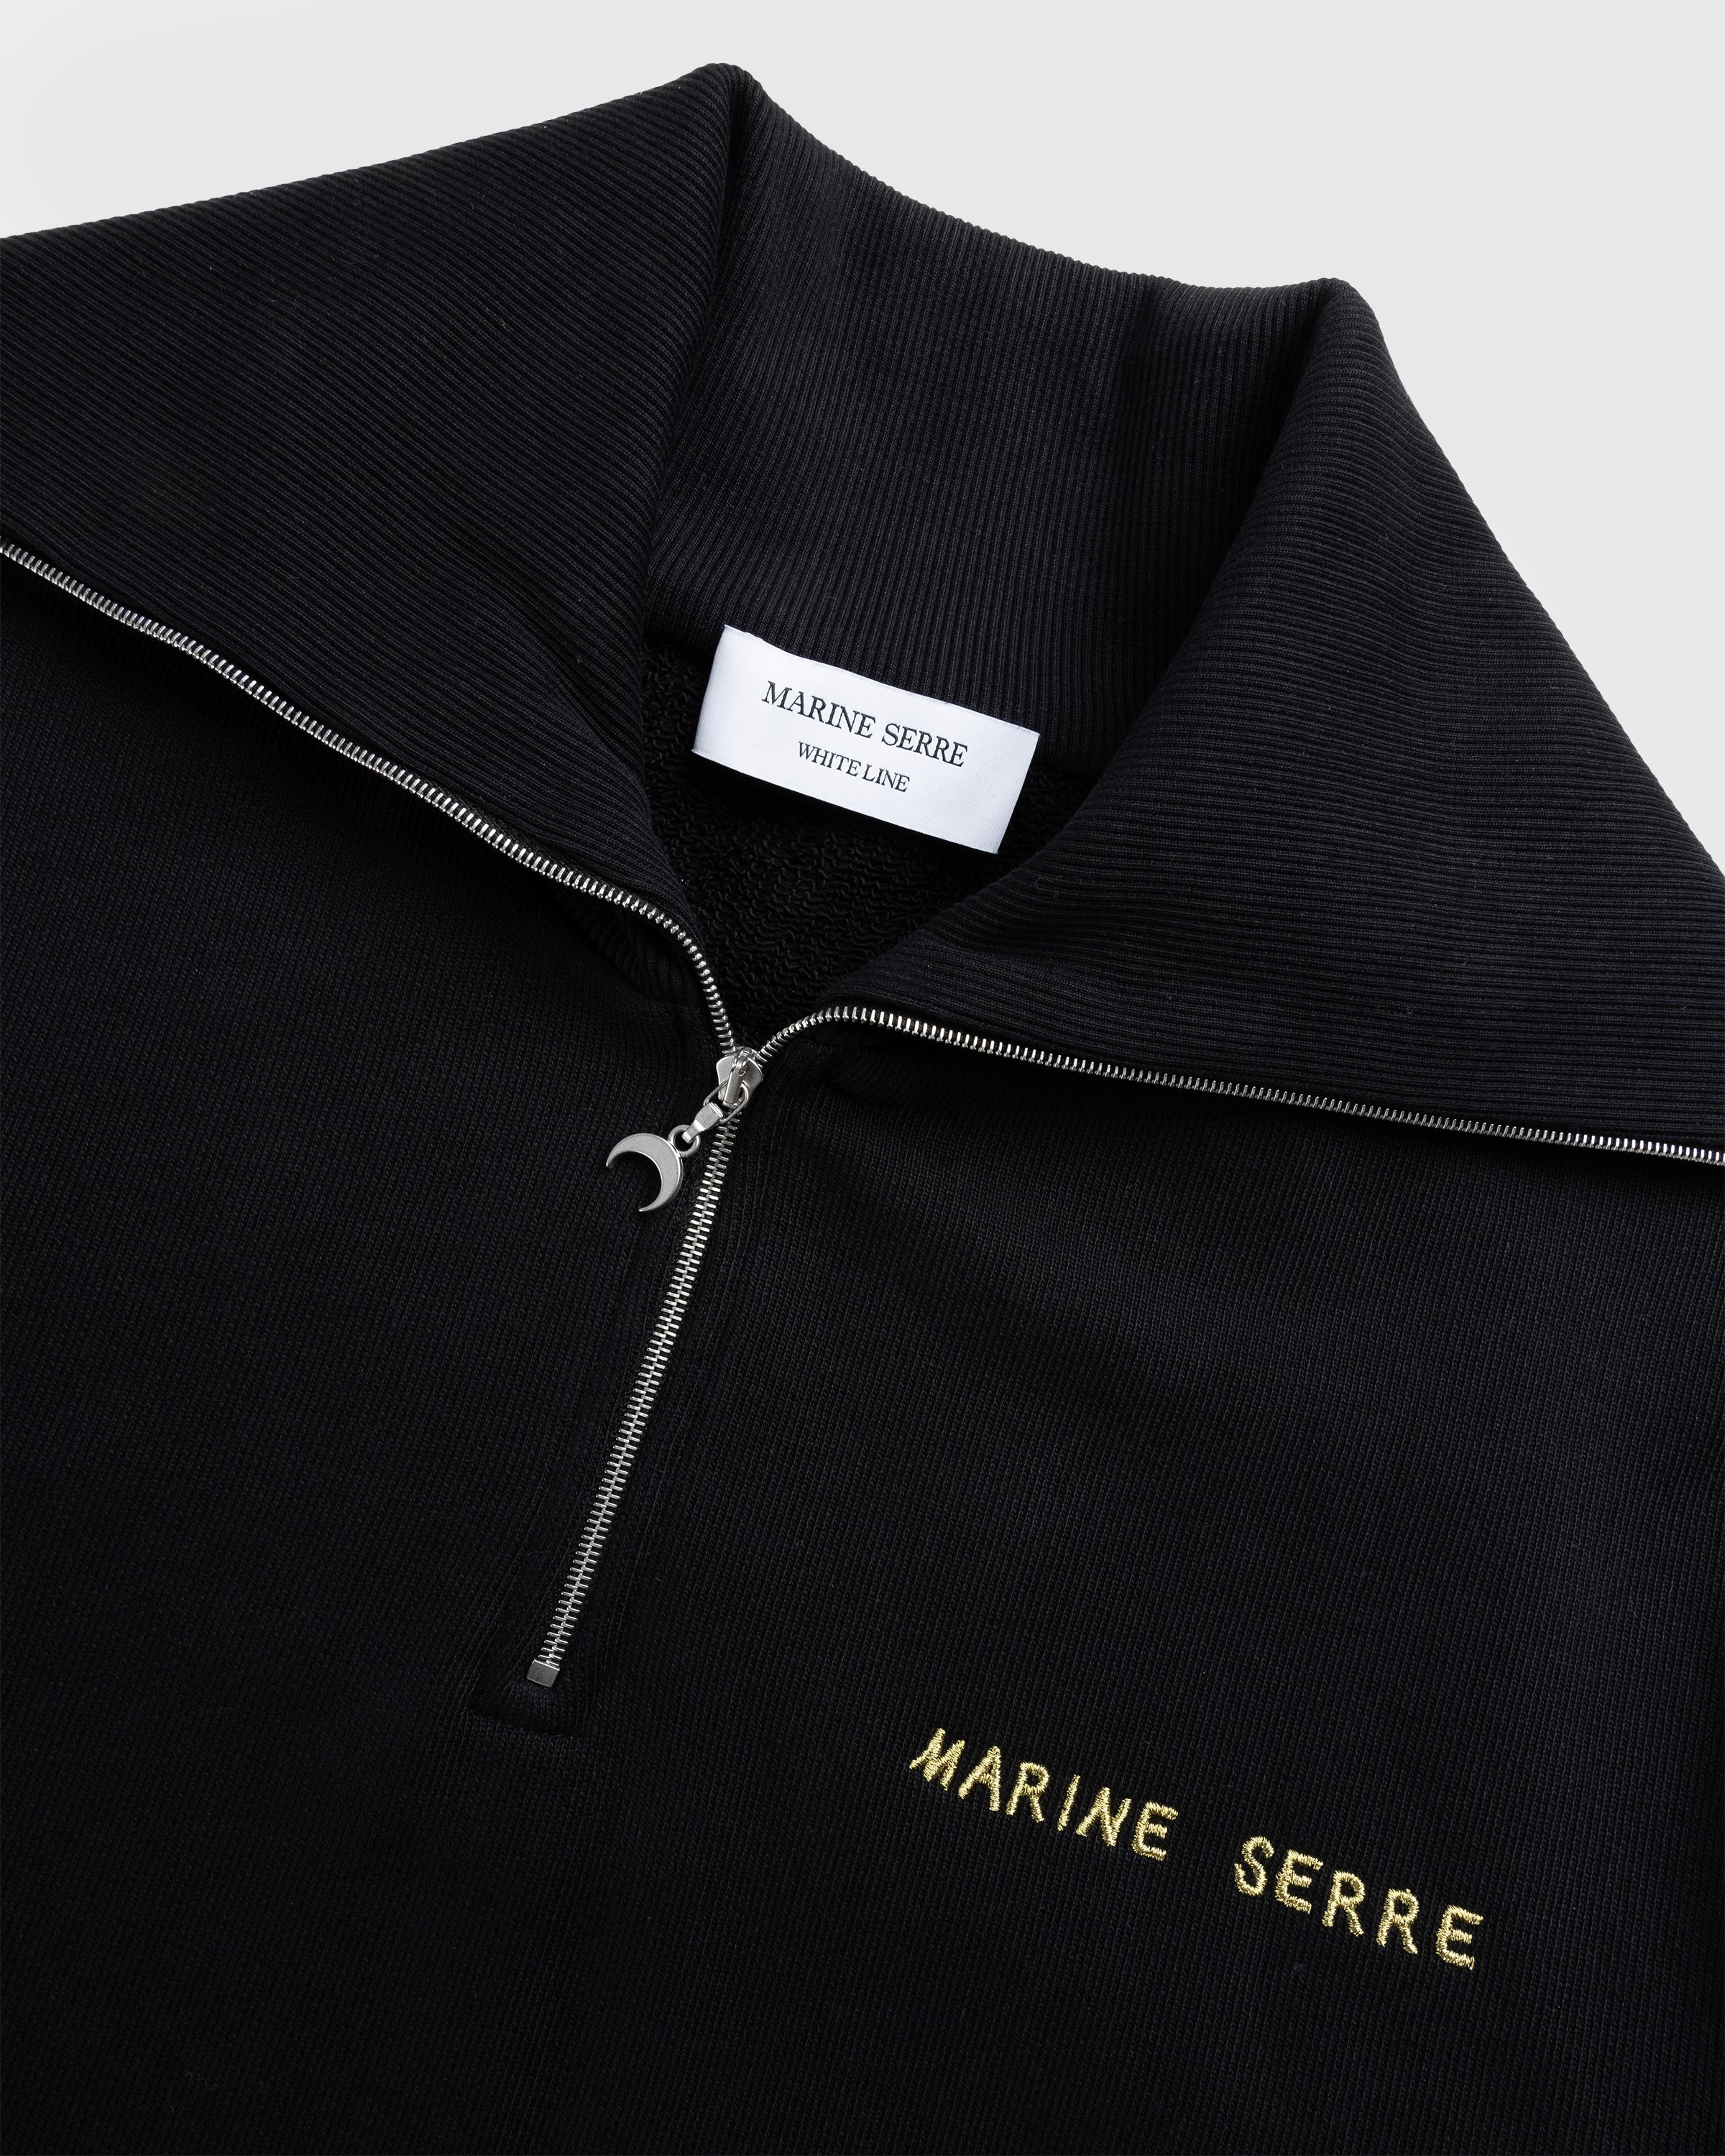 Marine Serre - Ornament Half-Zip Sweater Black - Clothing - Black - Image 5